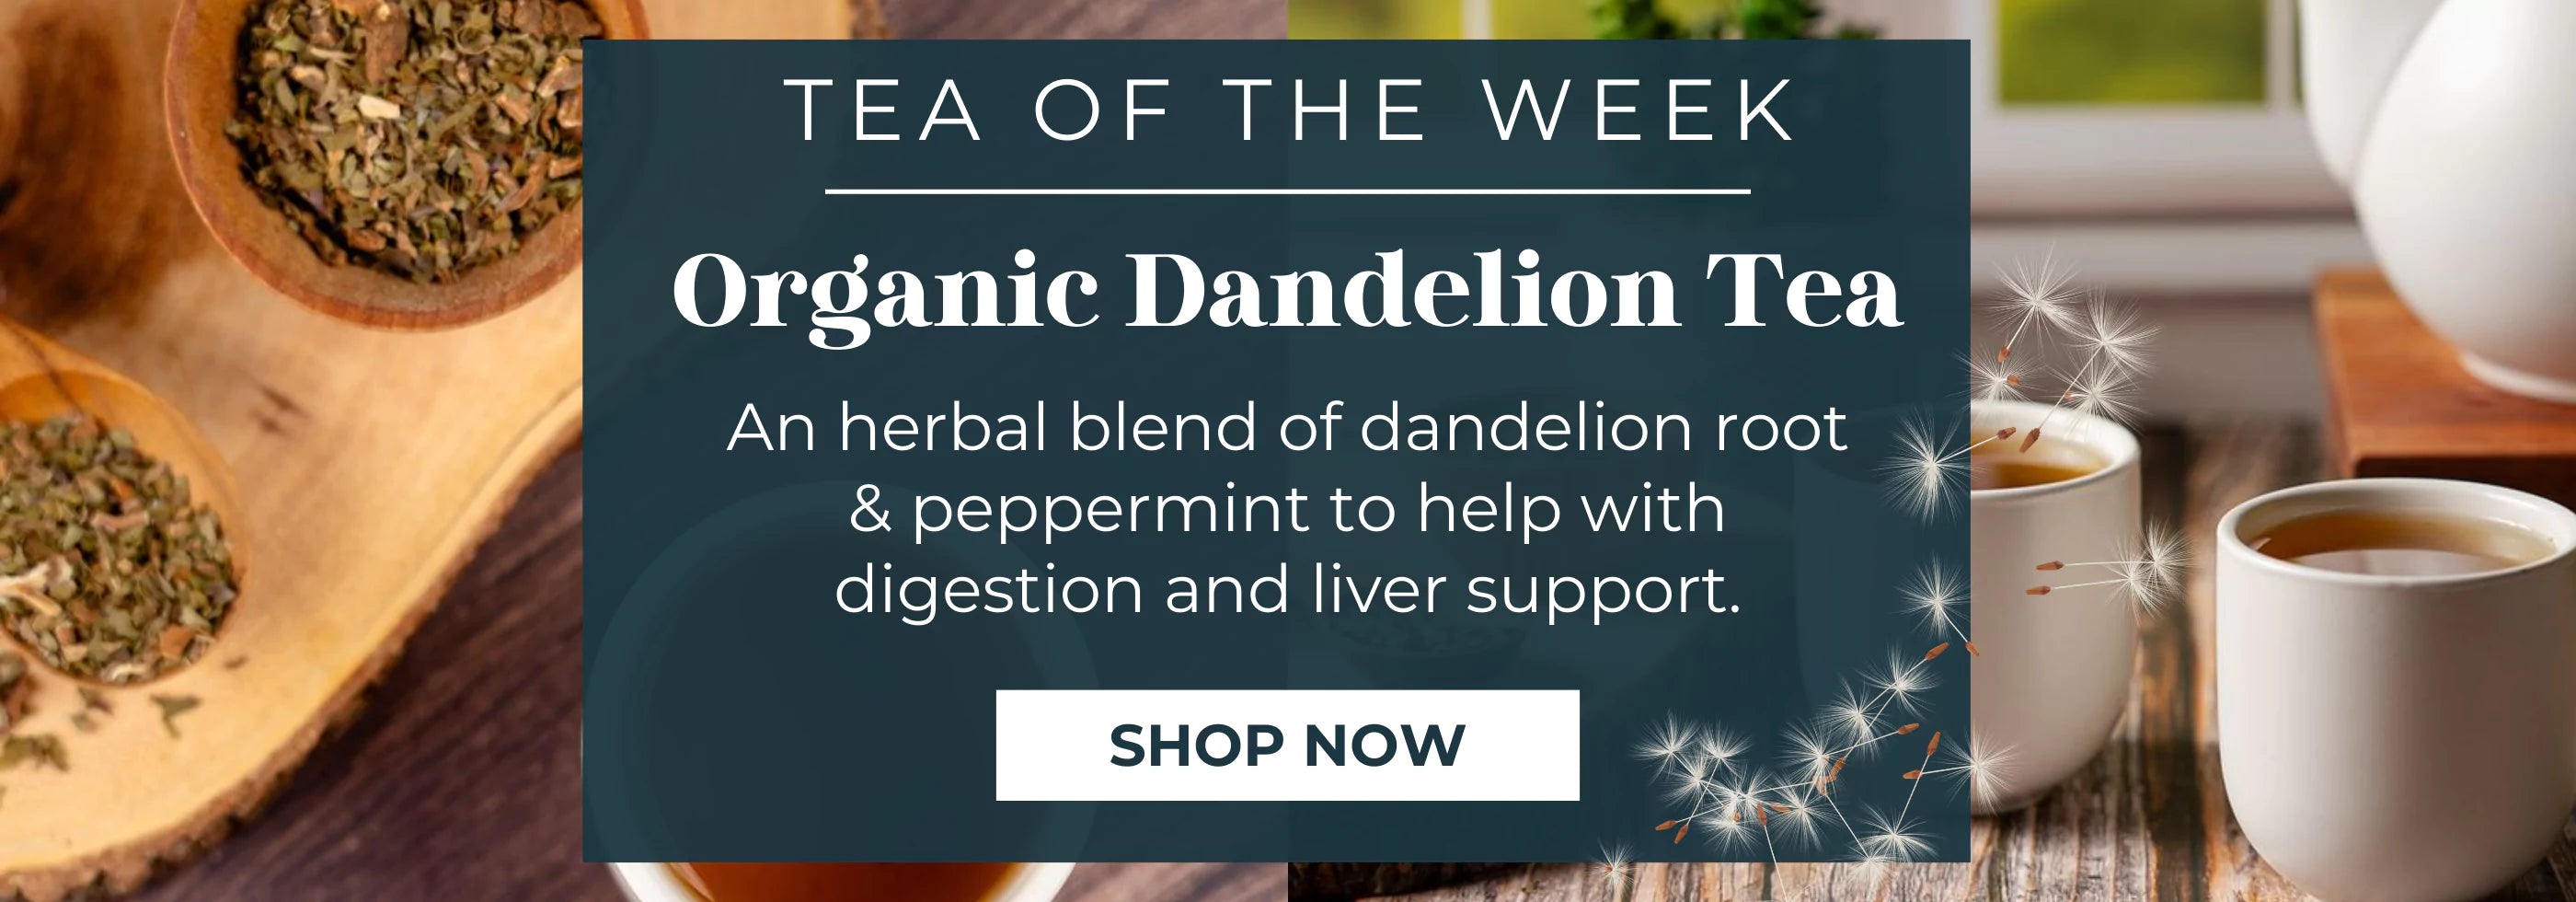 Tea of the Week - Organic Dandelion Tea